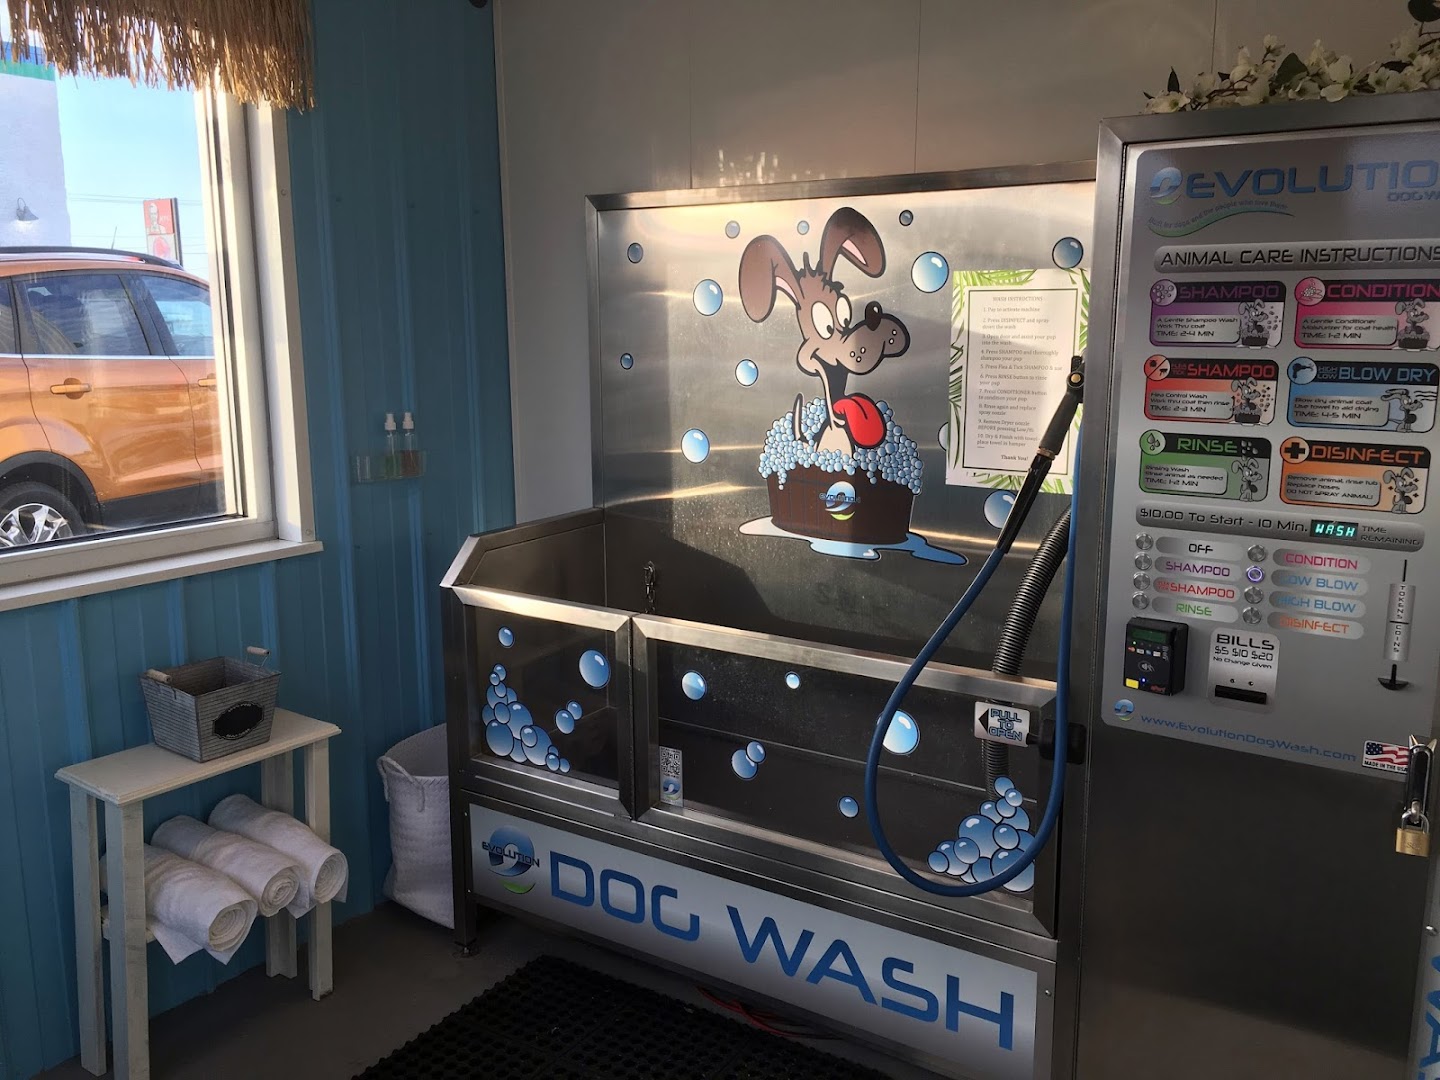 Spa Dogs Self-Serve Pet Wash